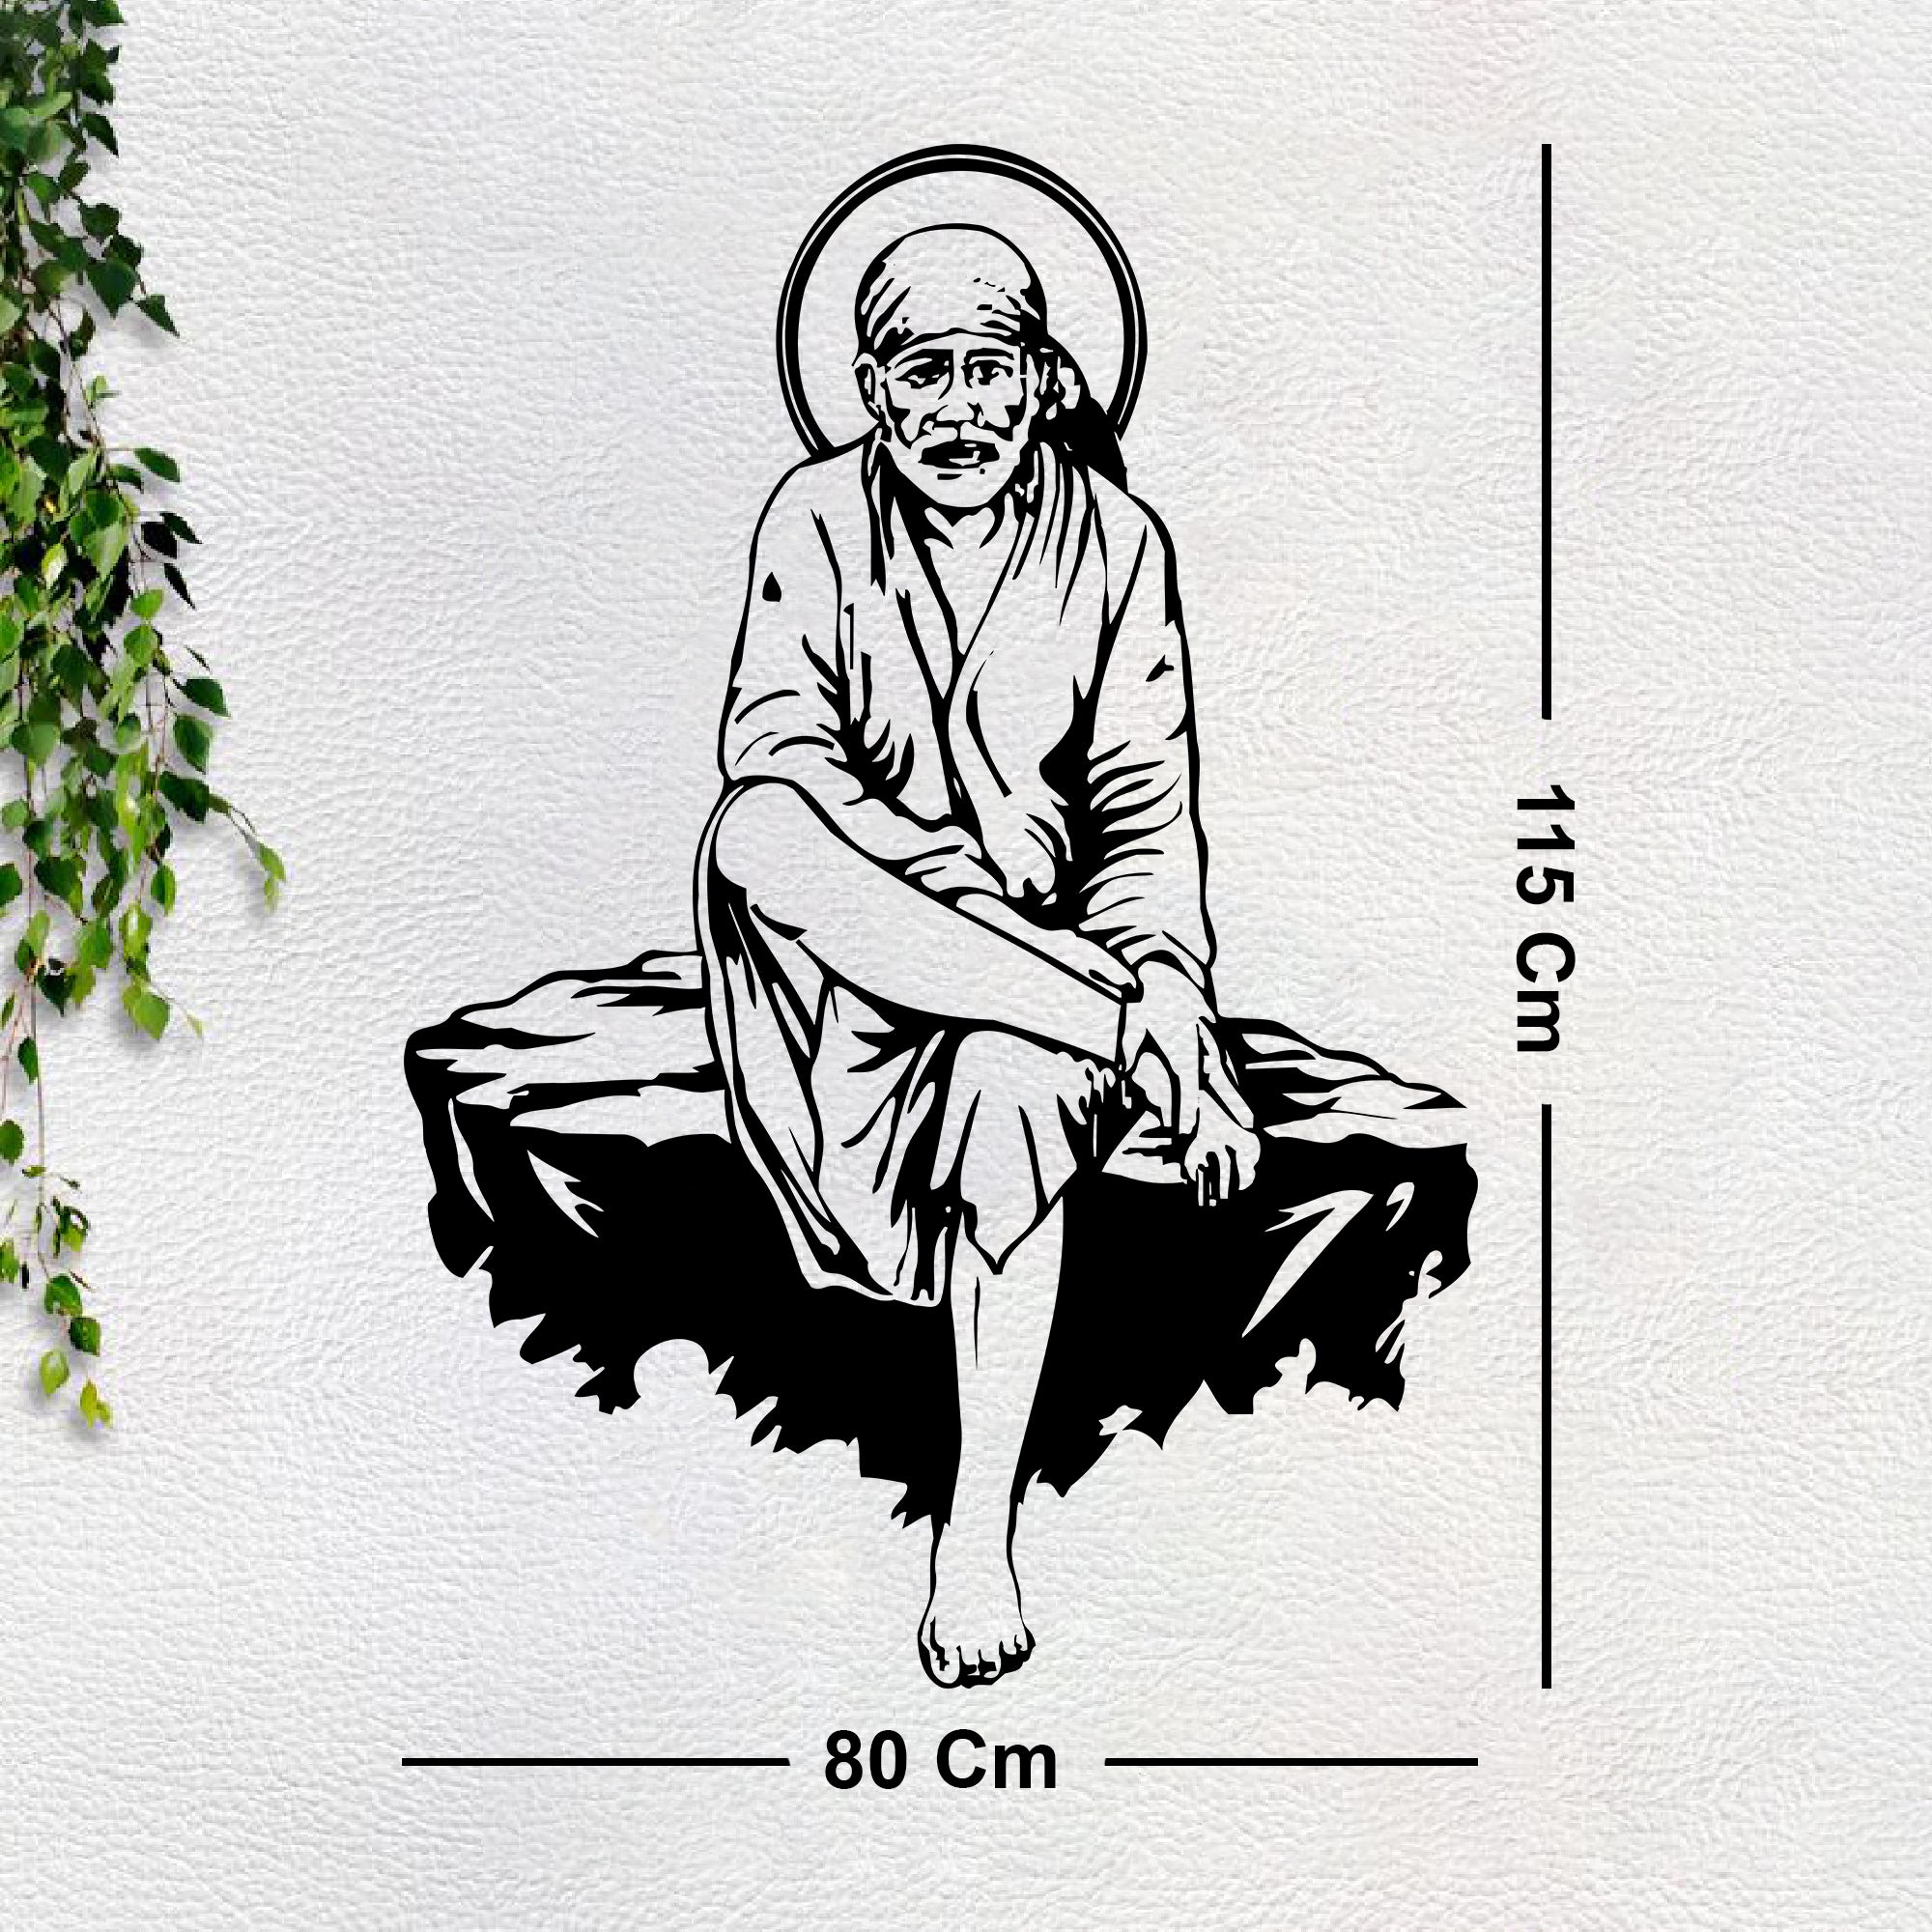 Sai Baba Religious Wall Sticker for Home